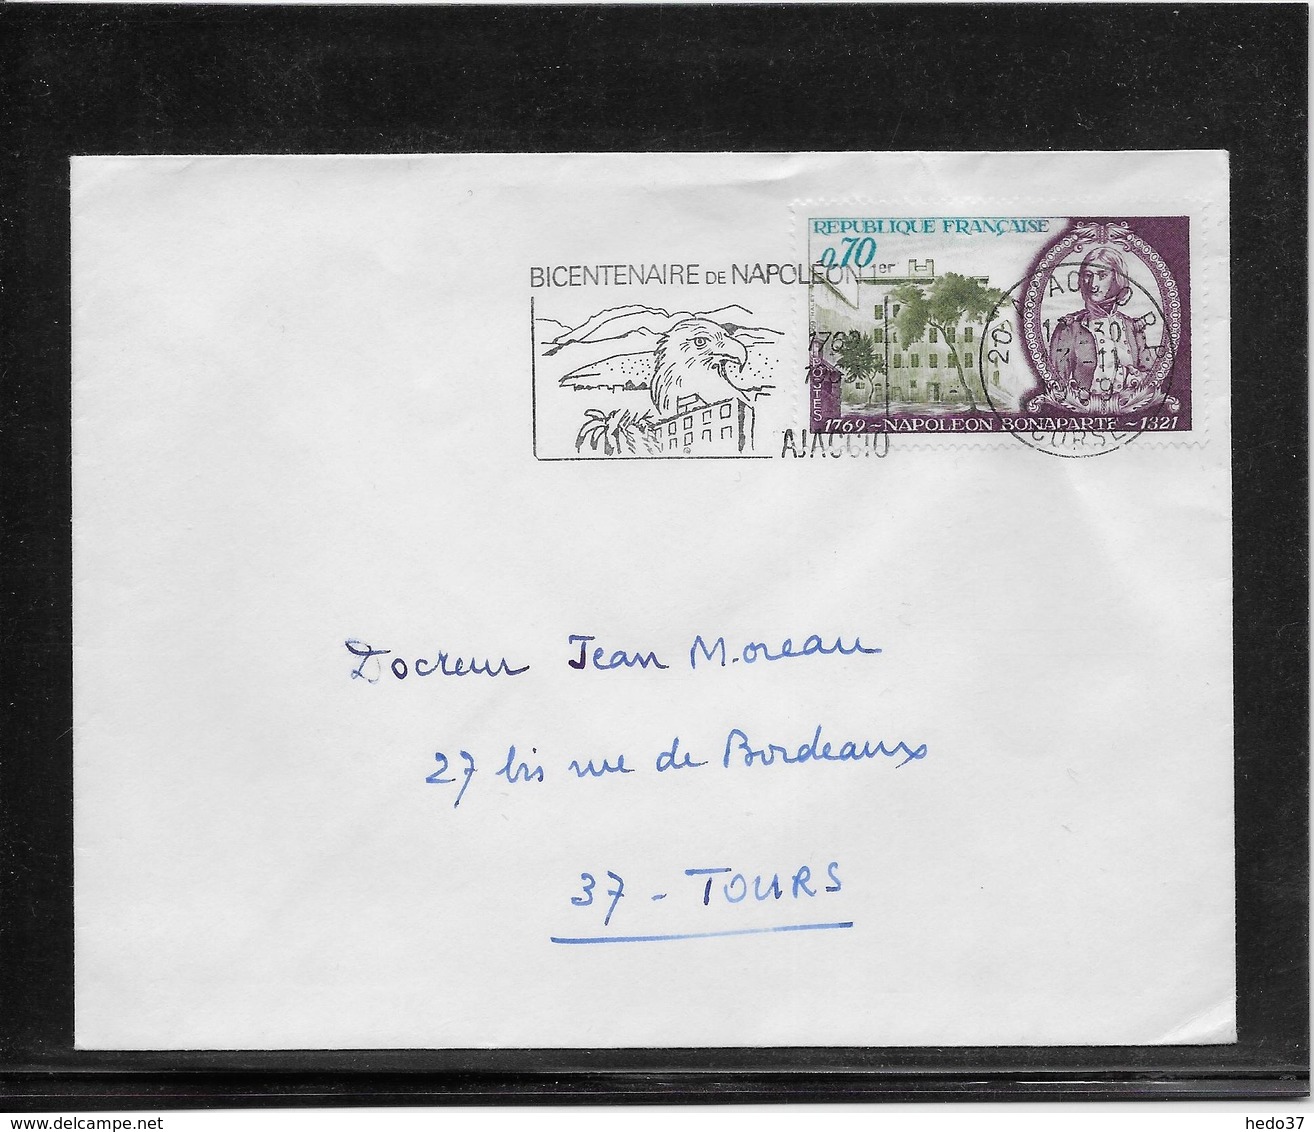 Thème Oiseaux - France Oblitération - Enveloppe - Mechanical Postmarks (Advertisement)